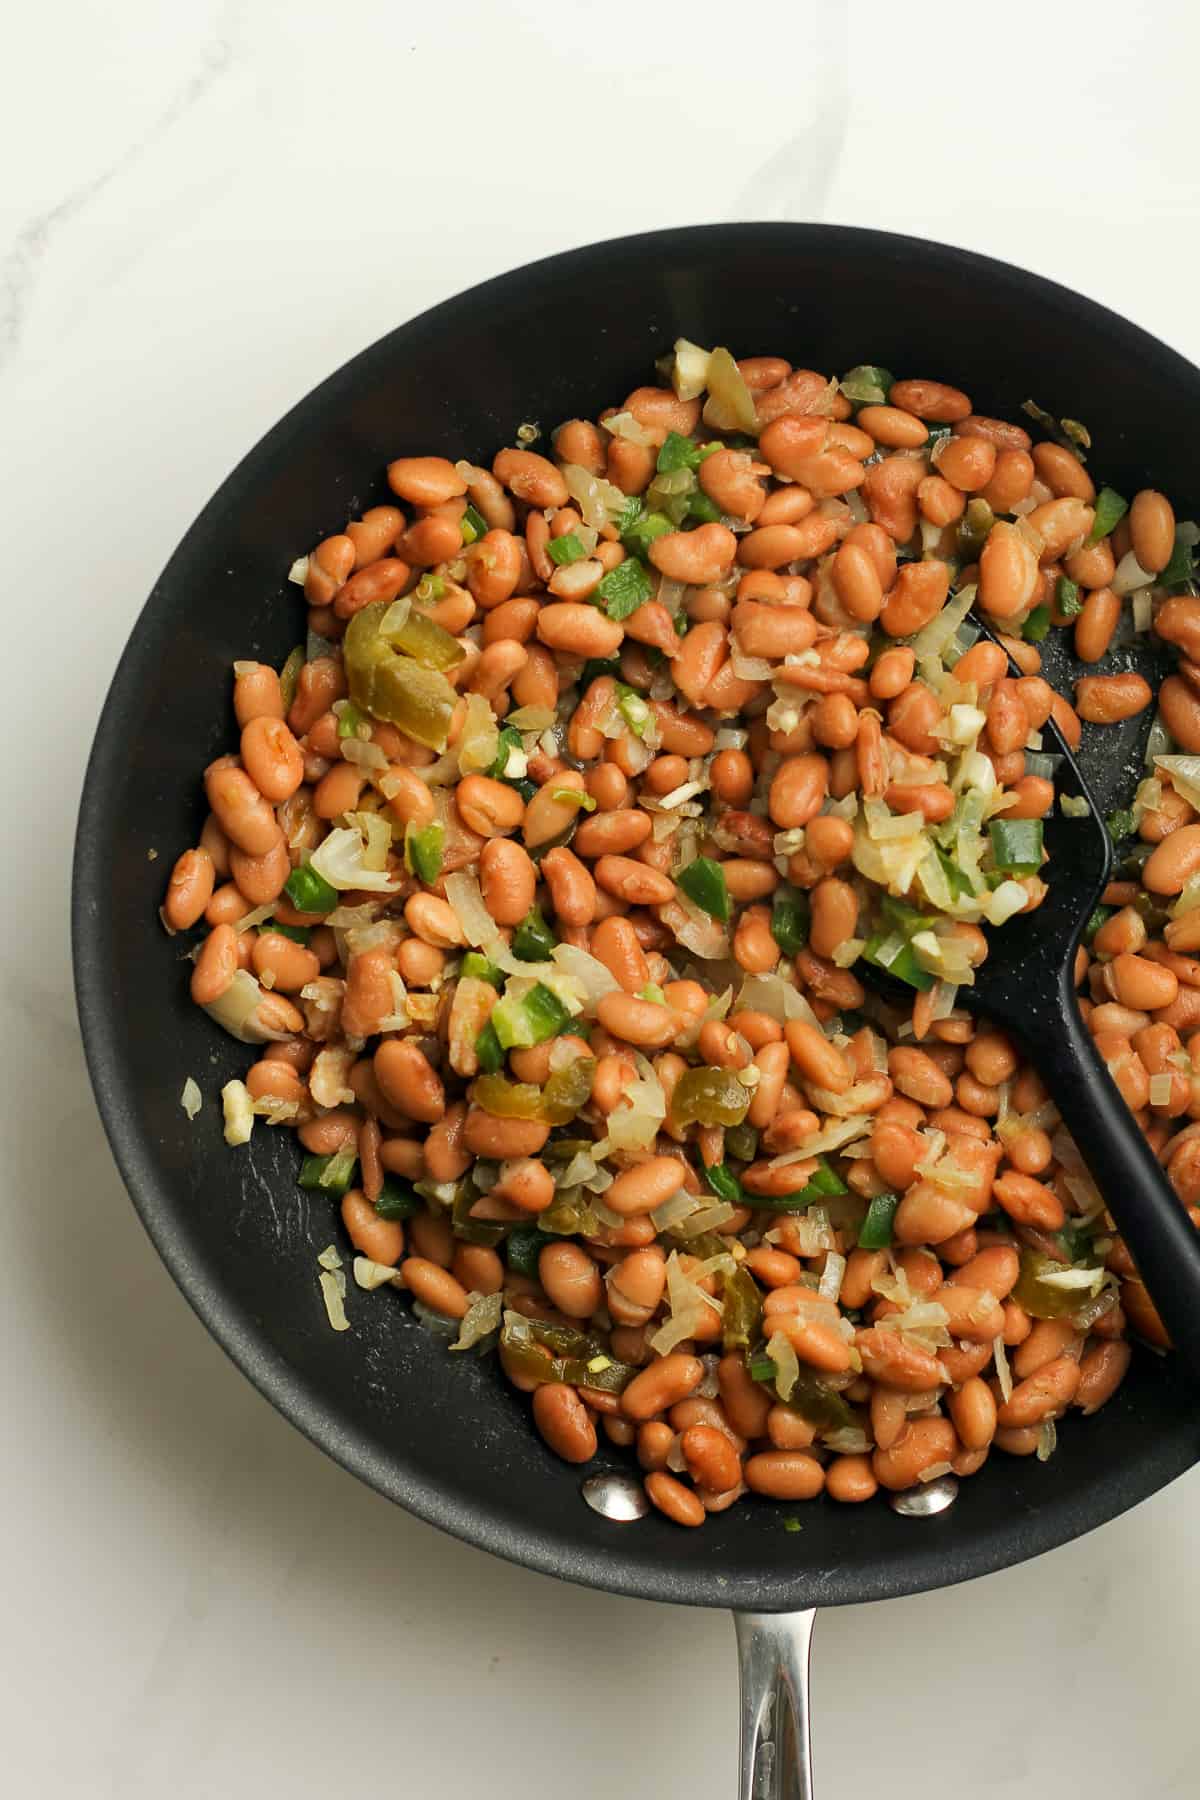 A saute pan of the veggies plus pinto beans.